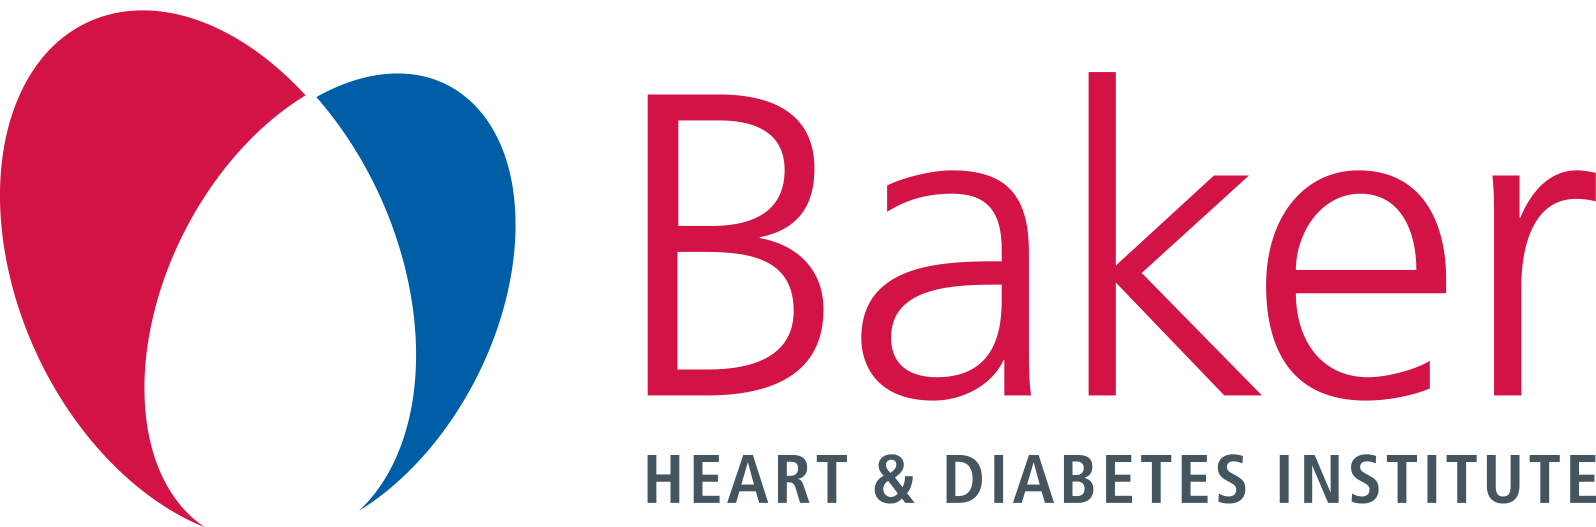 Baker Heart and Diabetes Institute Logo